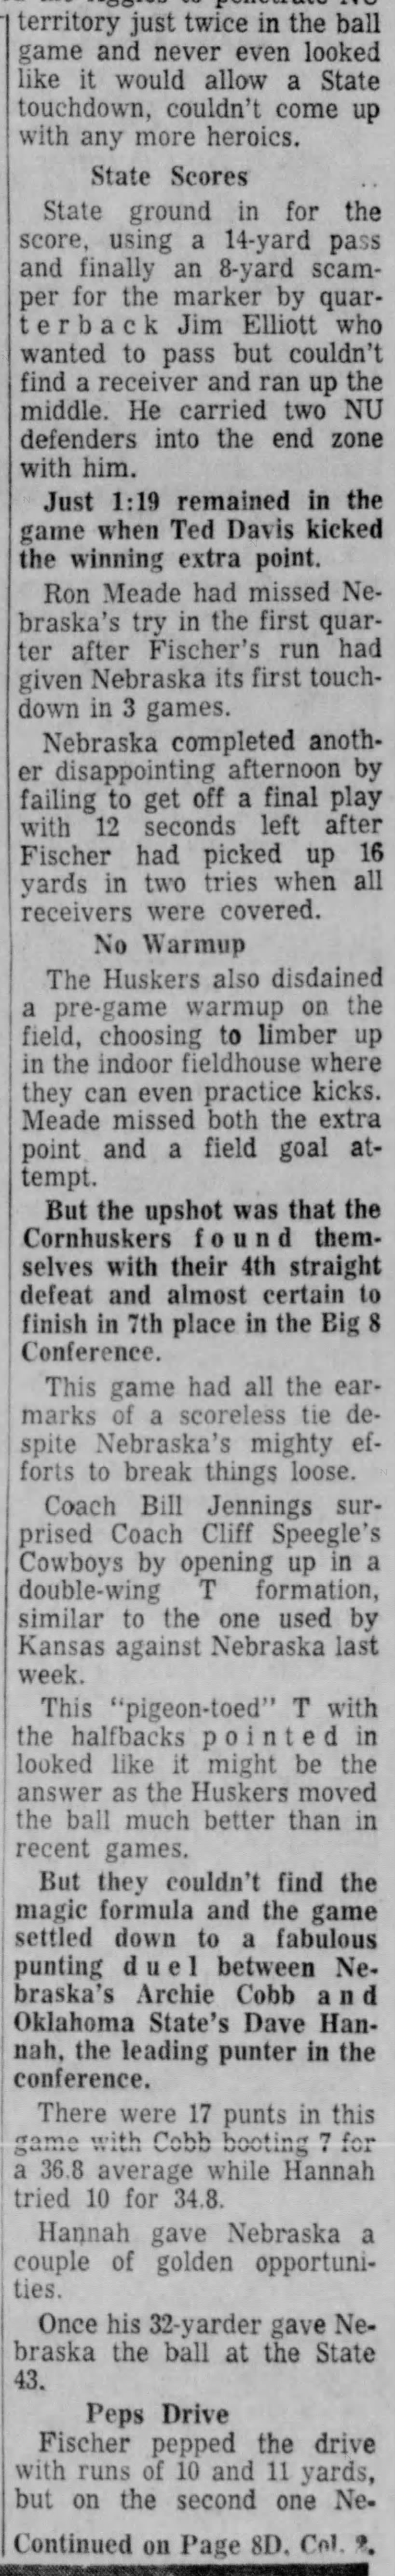 1960 Nebraska-Oklahoma State football, part 2